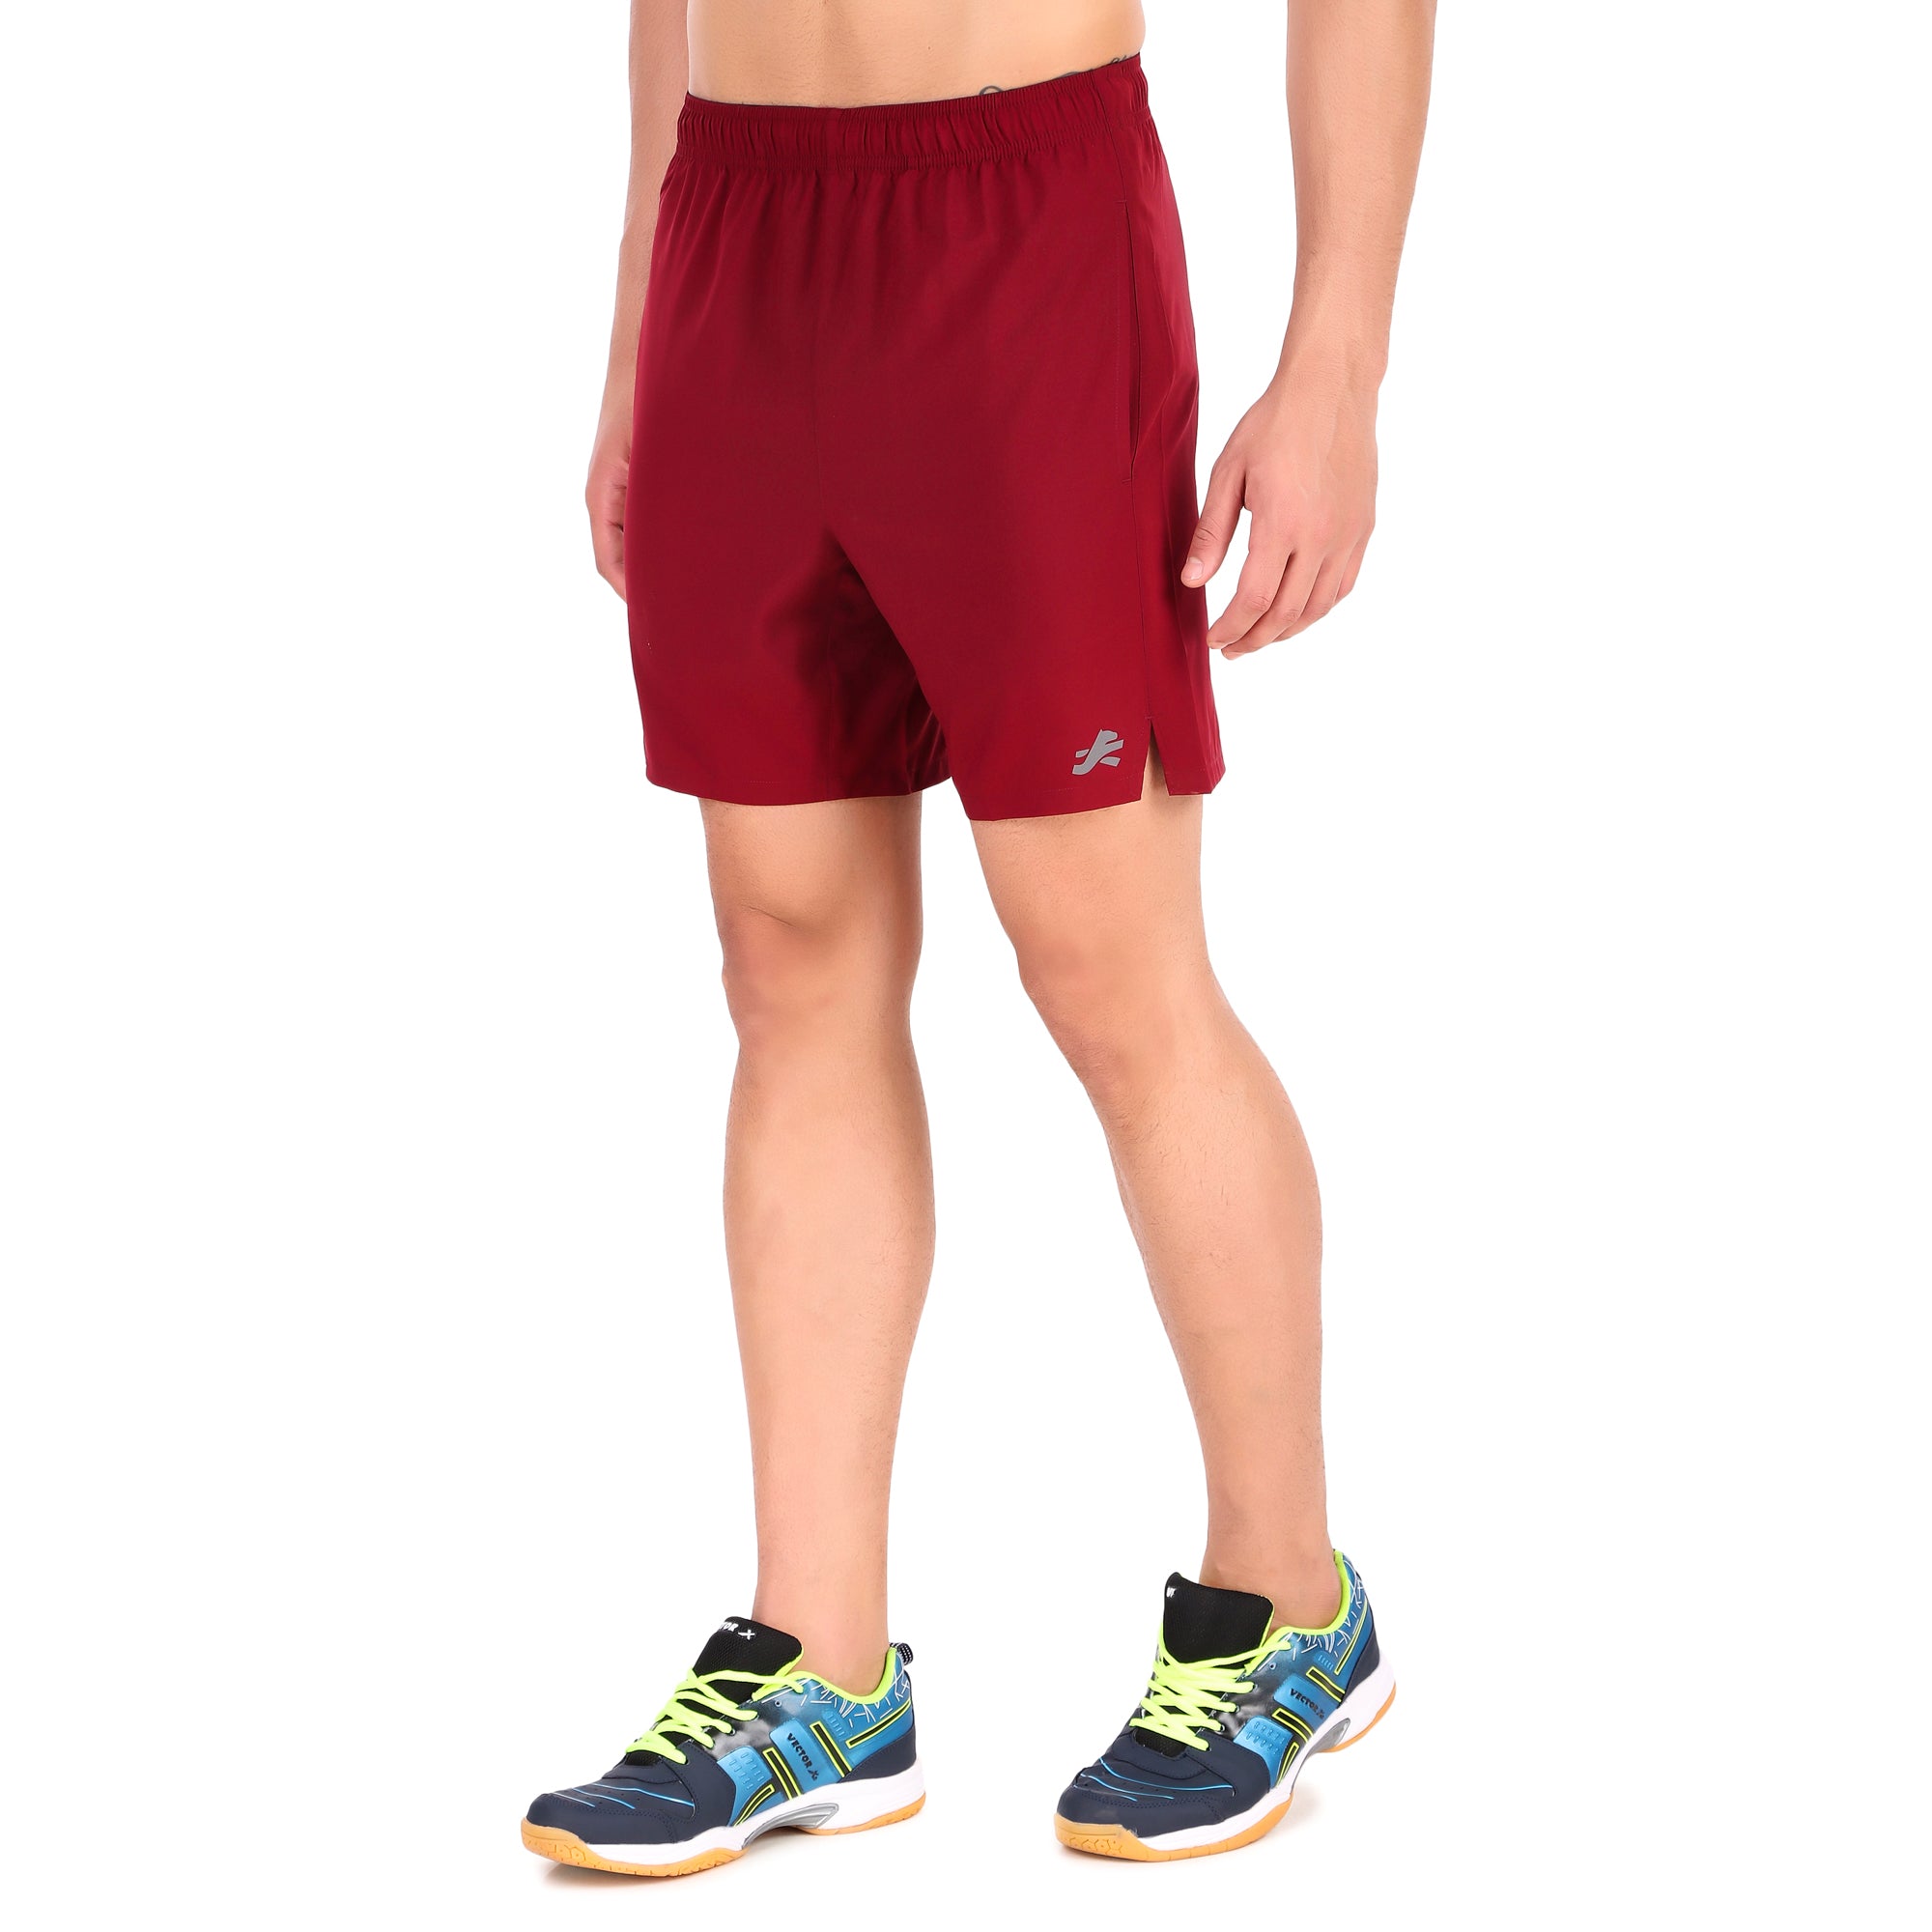 Ultra Lightweight Sports Shorts For Men (Maroon)